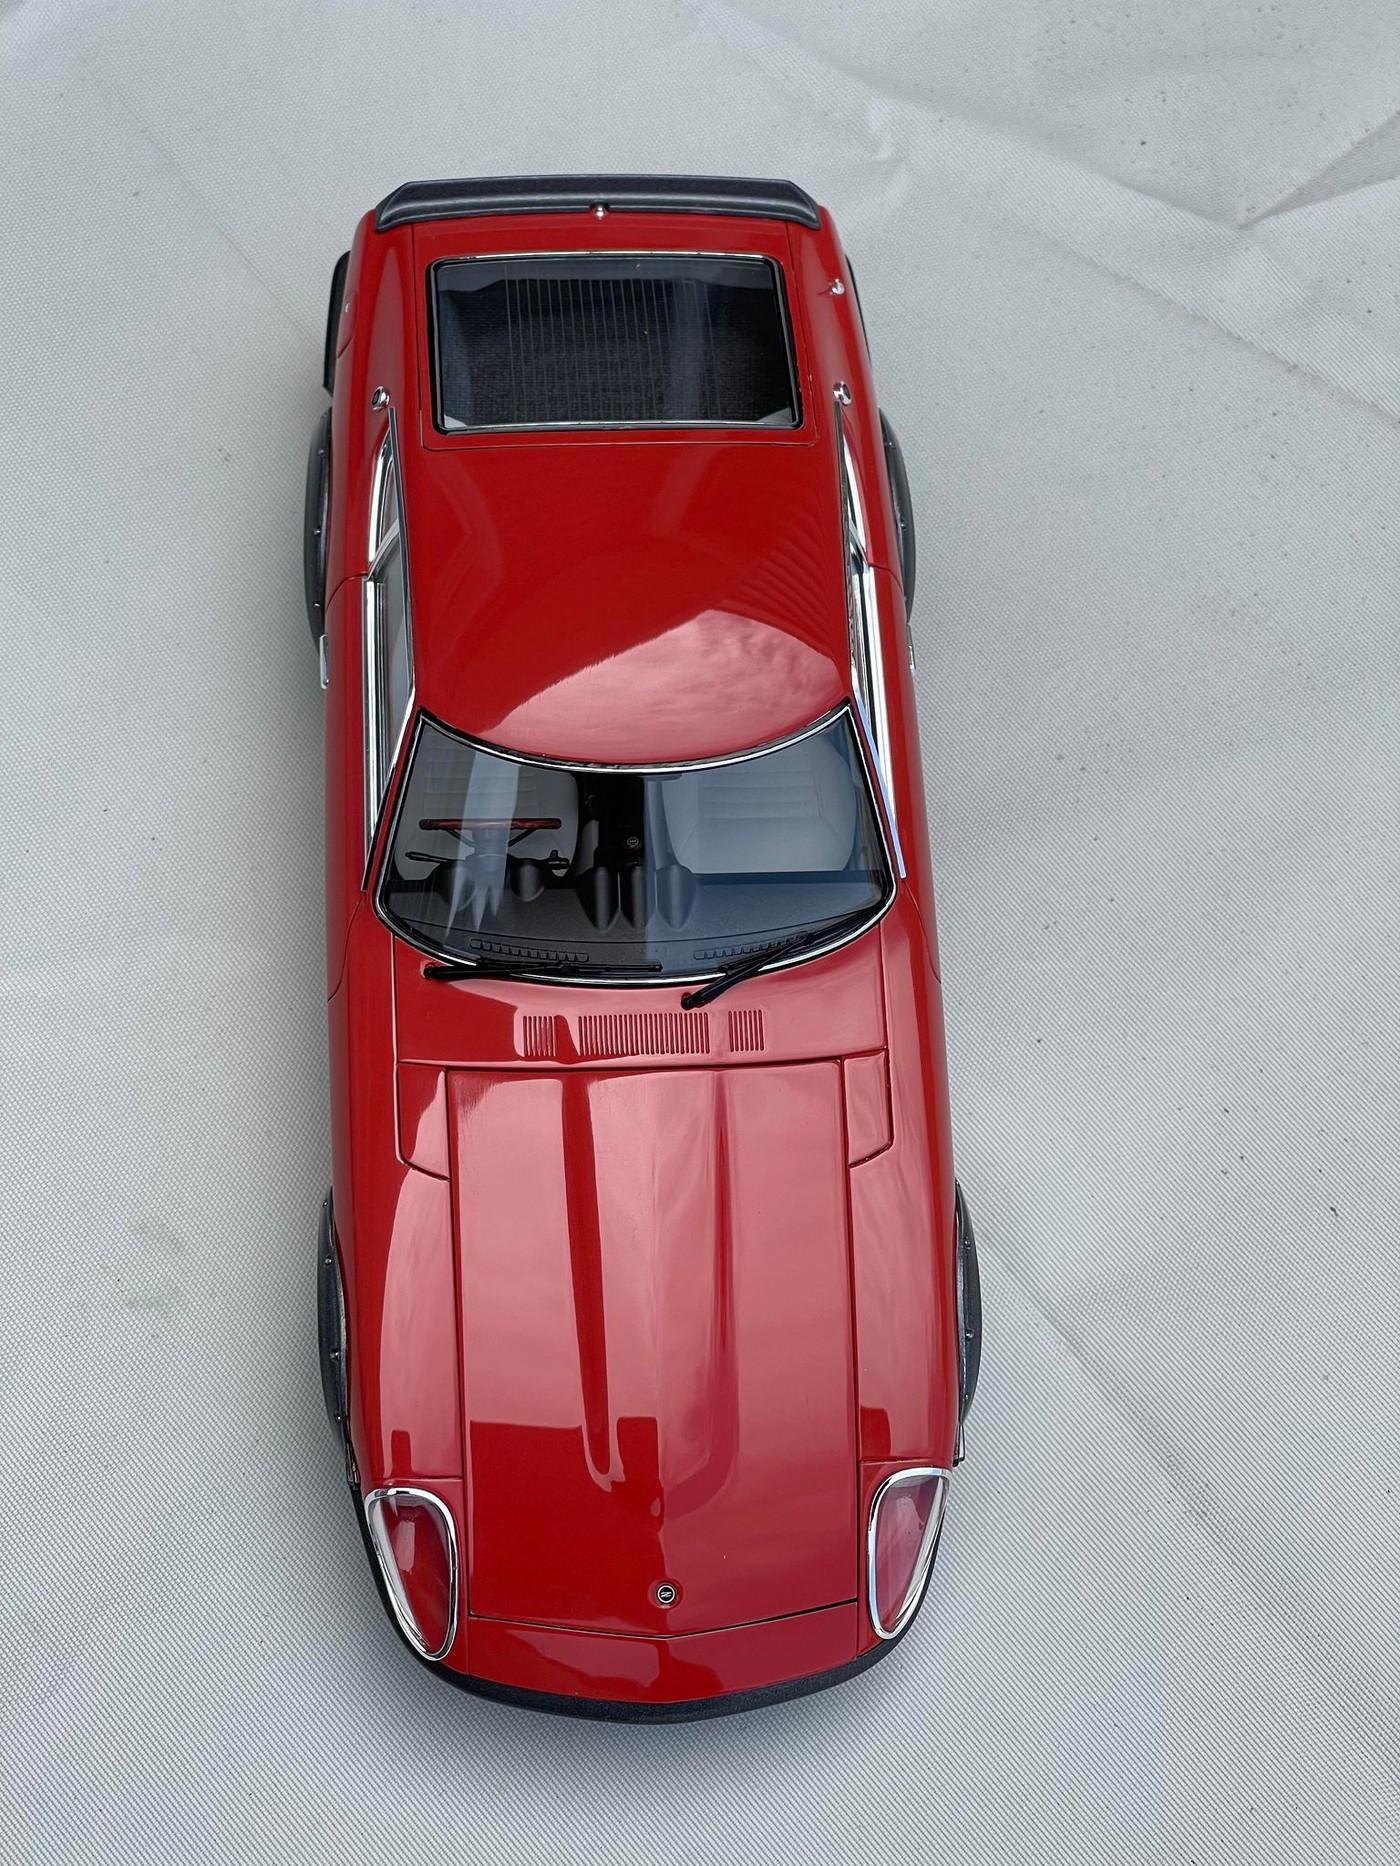 Tamiya Nissan Fairlady 240ZG - Model Cars - Model Cars Magazine Forum